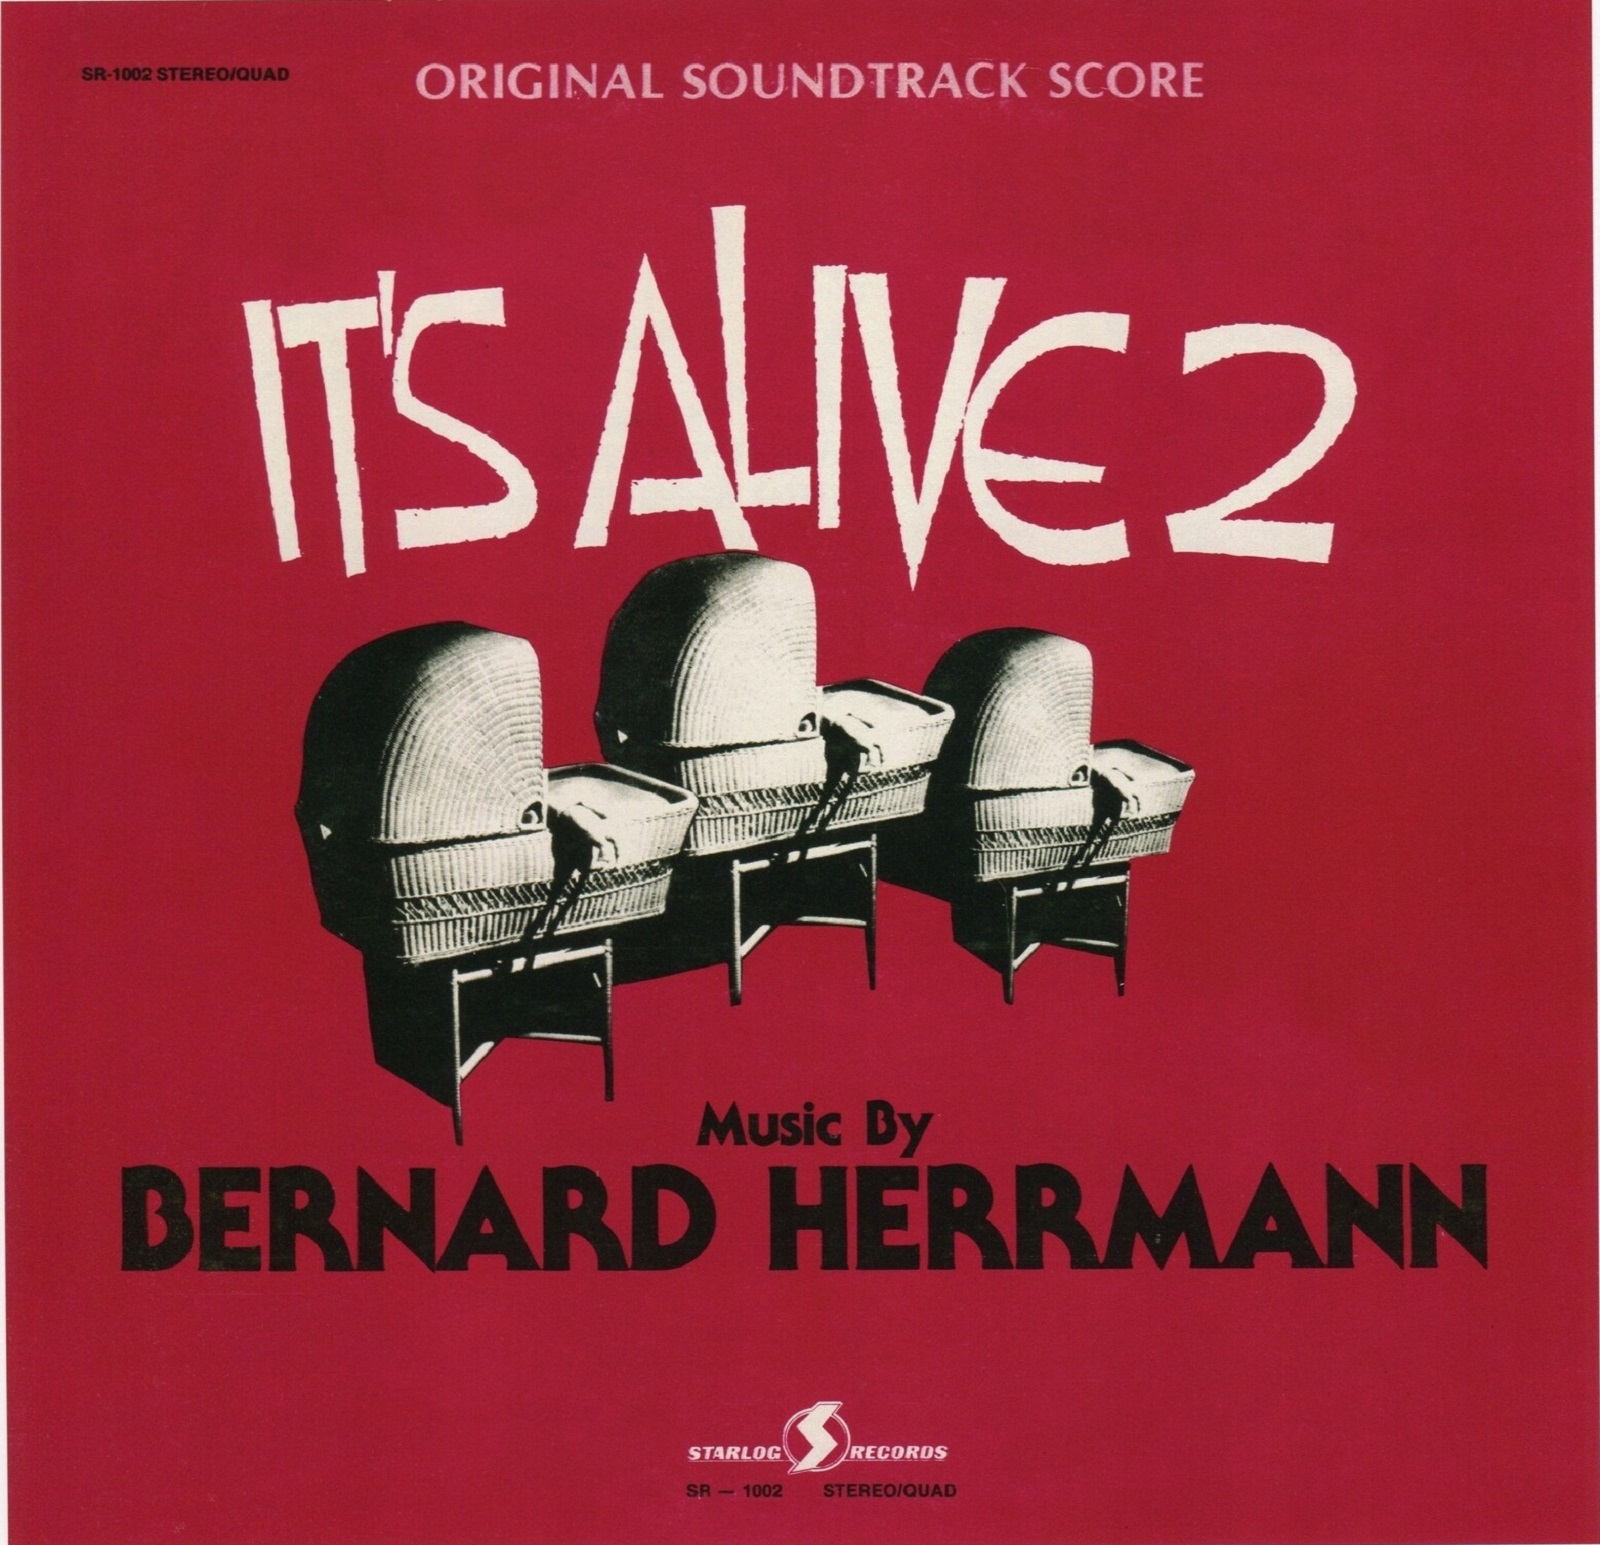 Bernard Herrmann. Bernard Herrmann Soundtrack from Taxi Driver. Score soundtrack